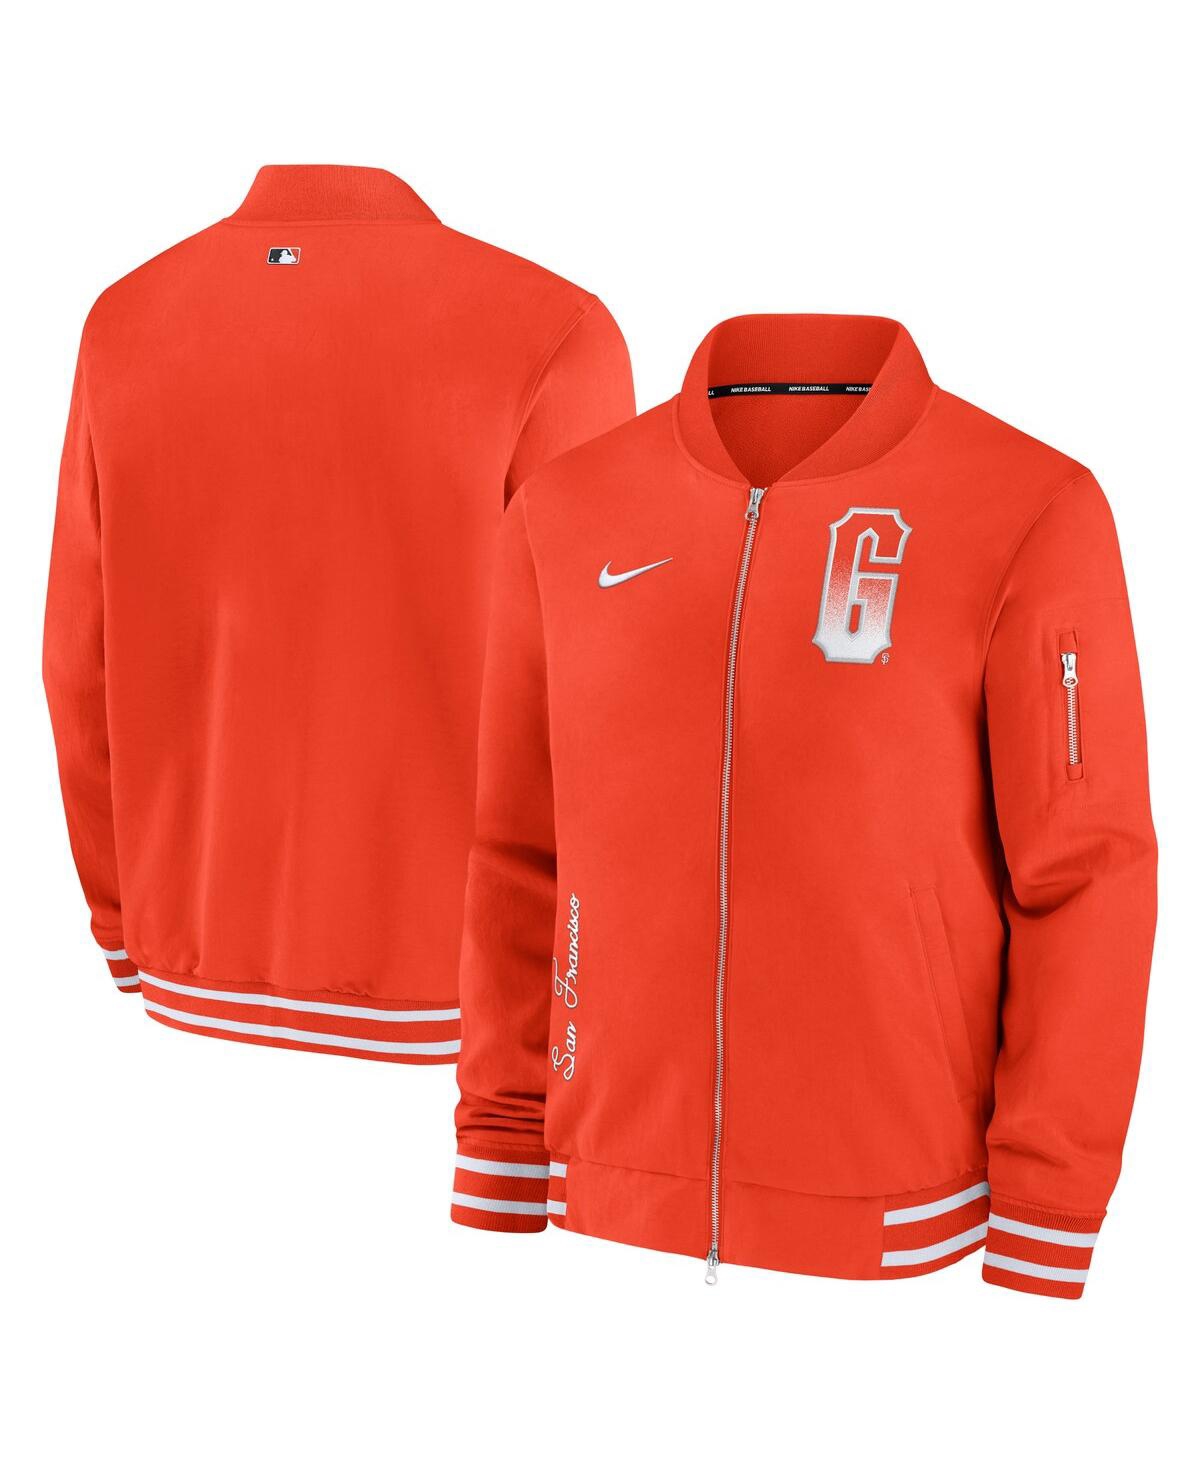 Men's Nike Orange San Francisco Giants Authentic Collection Game Time Bomber Full-Zip Jacket - Orange